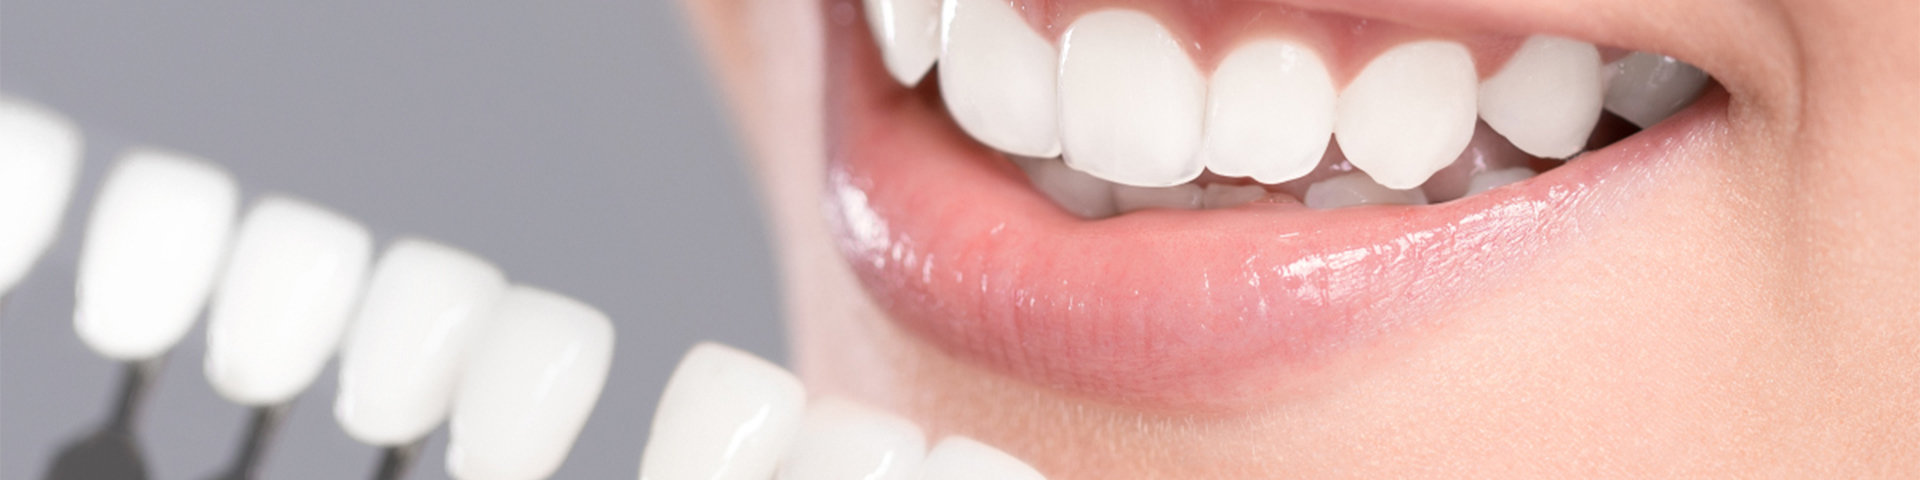 OEM New Technology Teeth Whitening Home Kit With LED Light